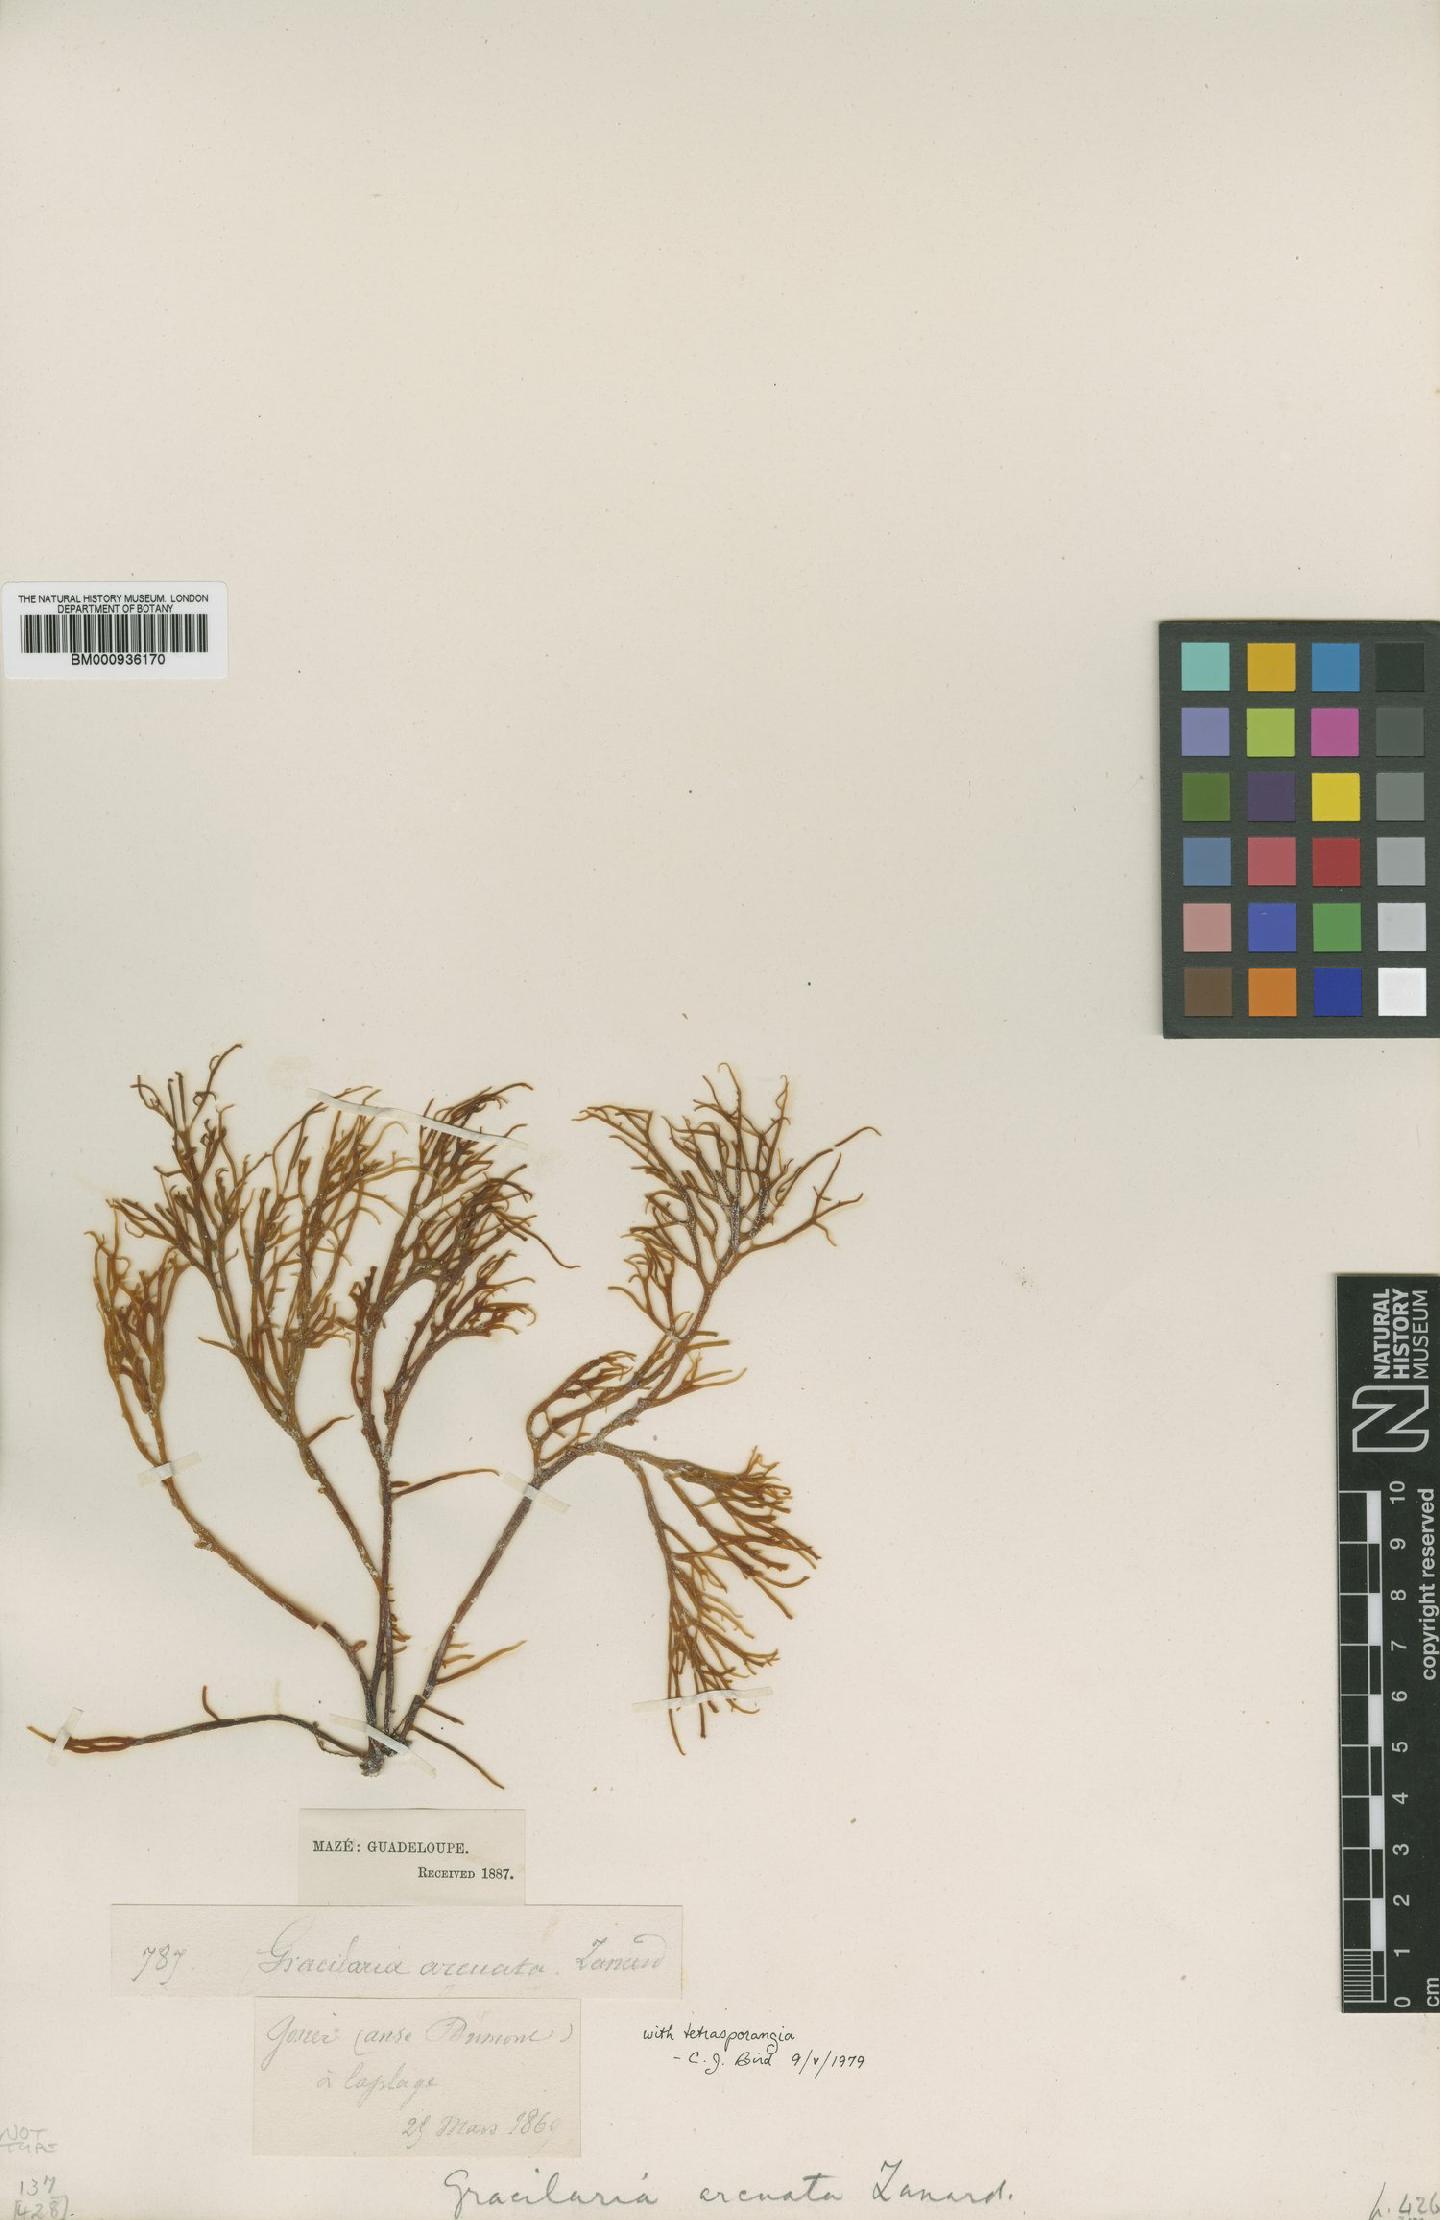 To NHMUK collection (Gracilaria arcuata Zanardini; TYPE; NHMUK:ecatalogue:436915)